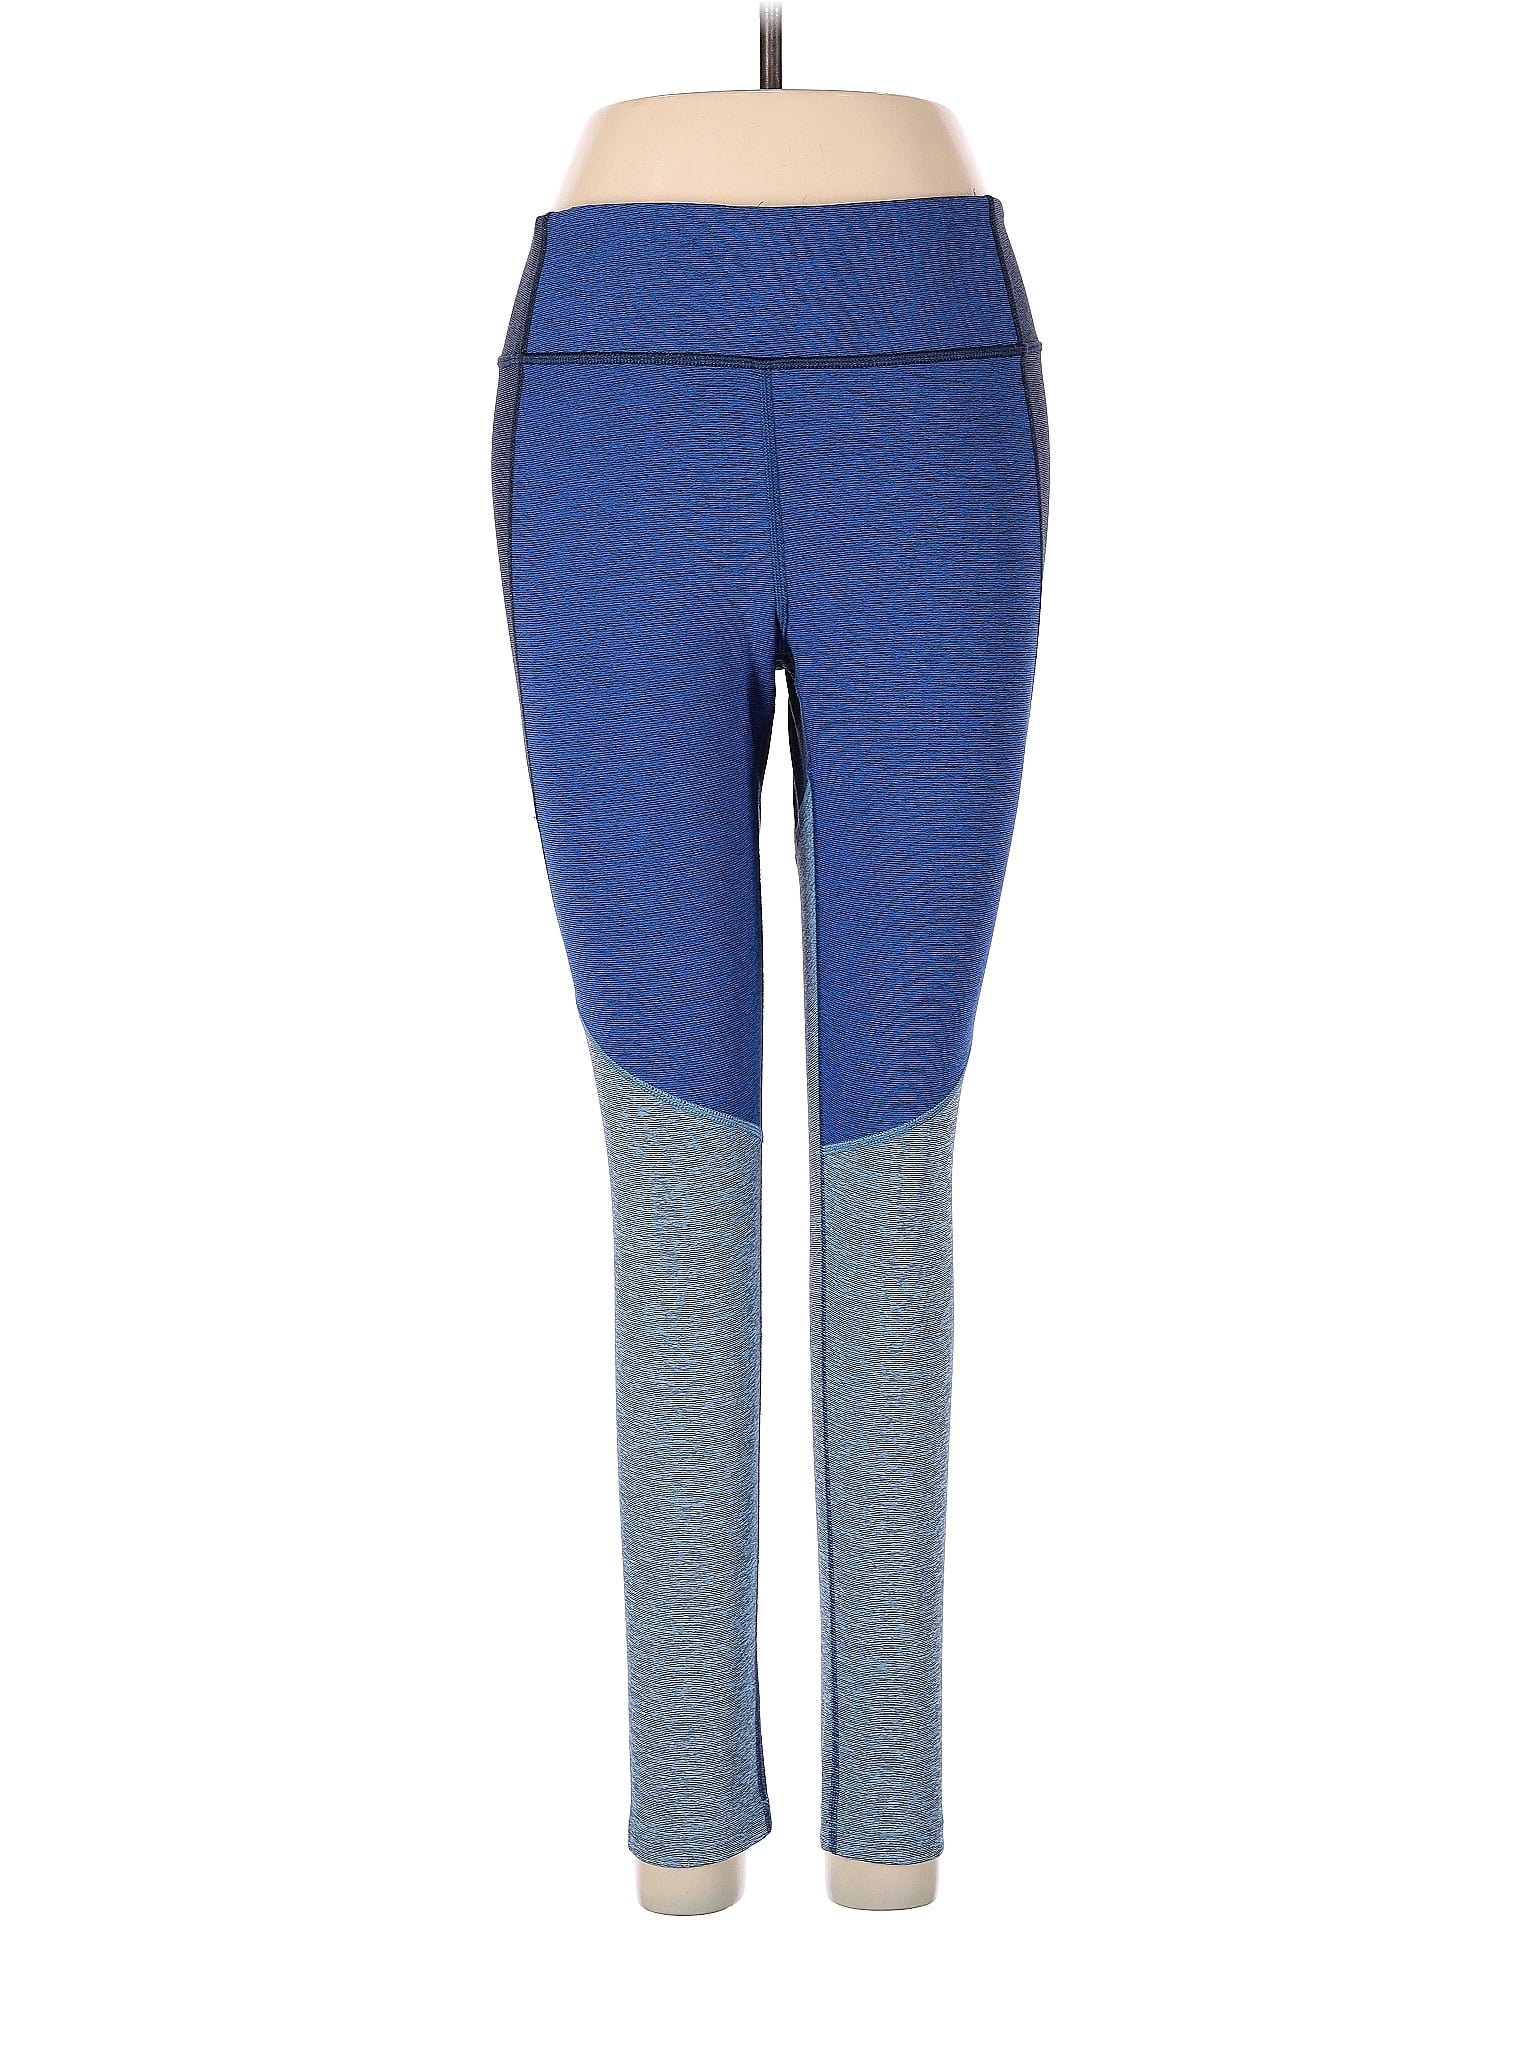 Alo Yoga Blue Active Pants Size XS - 55% off